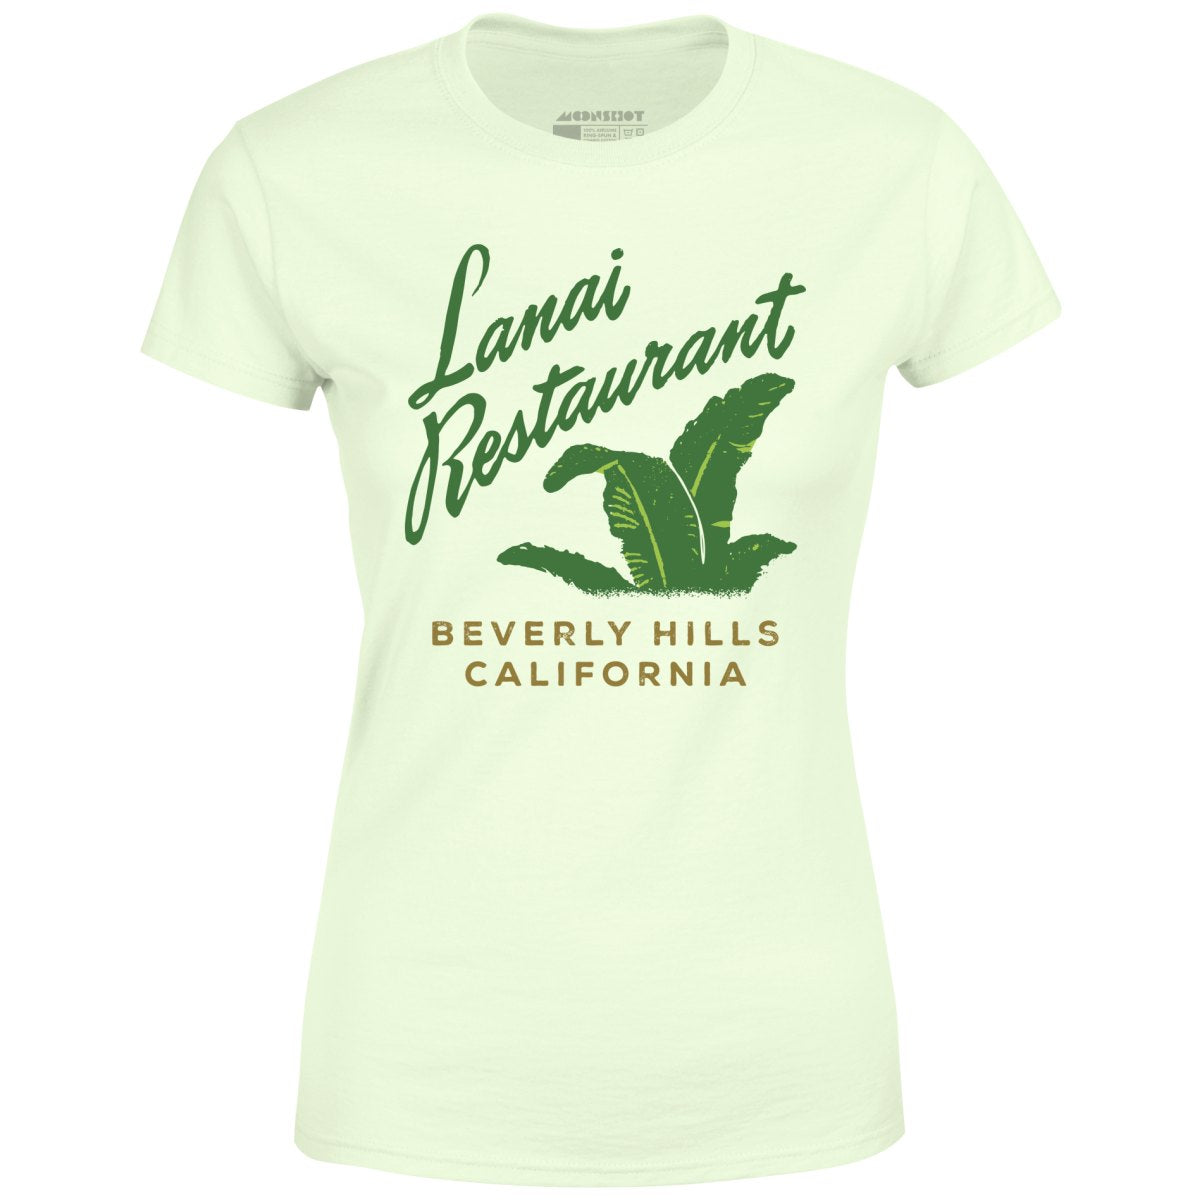 Lanai - Beverly Hills, CA - Vintage Restaurant - Women's T-Shirt